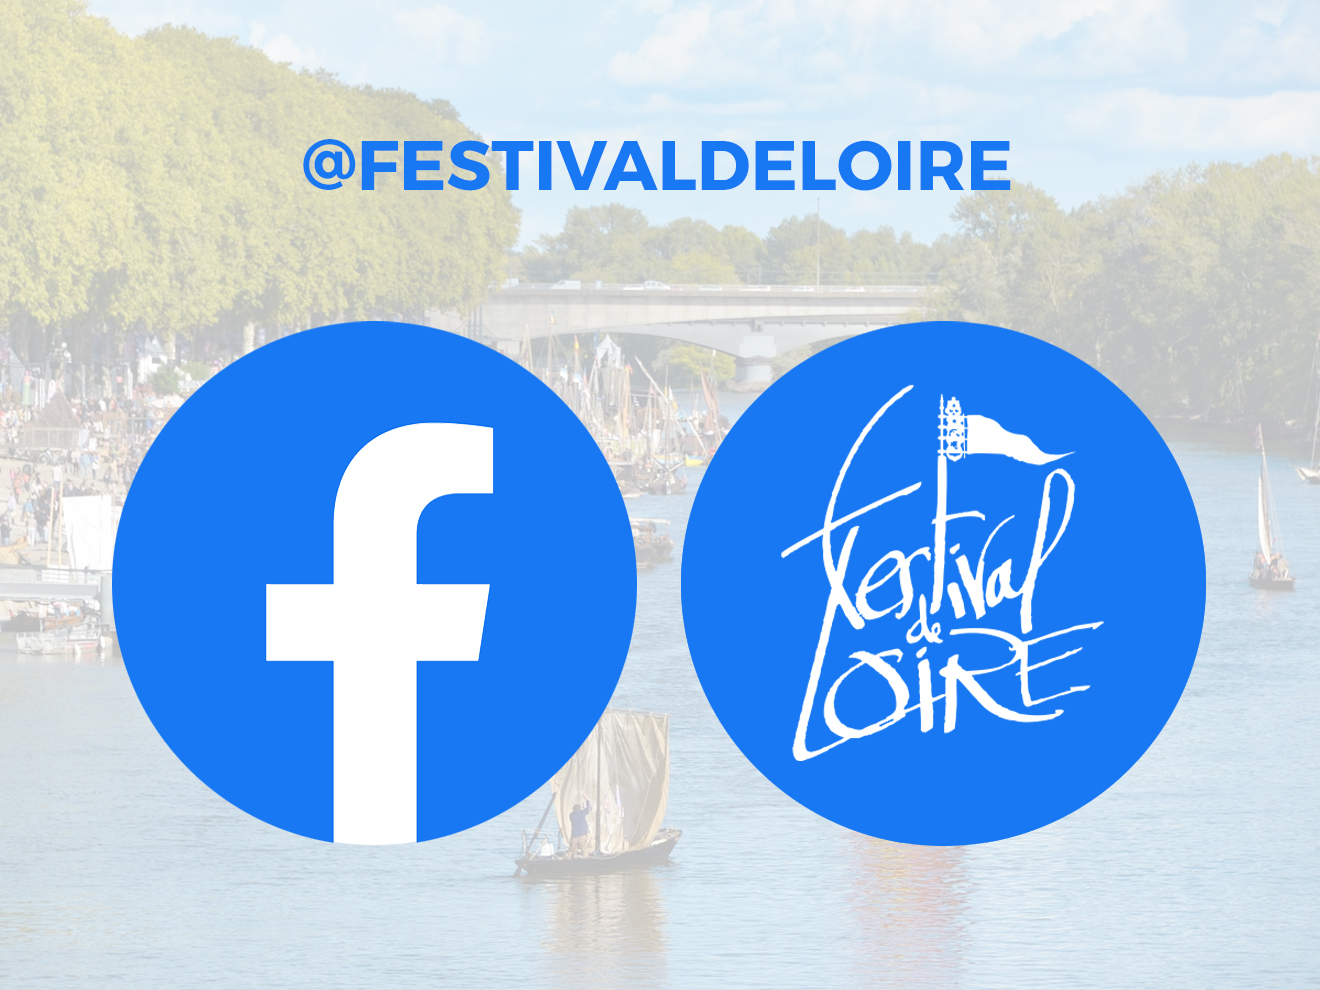 Facebook Festival de Loire